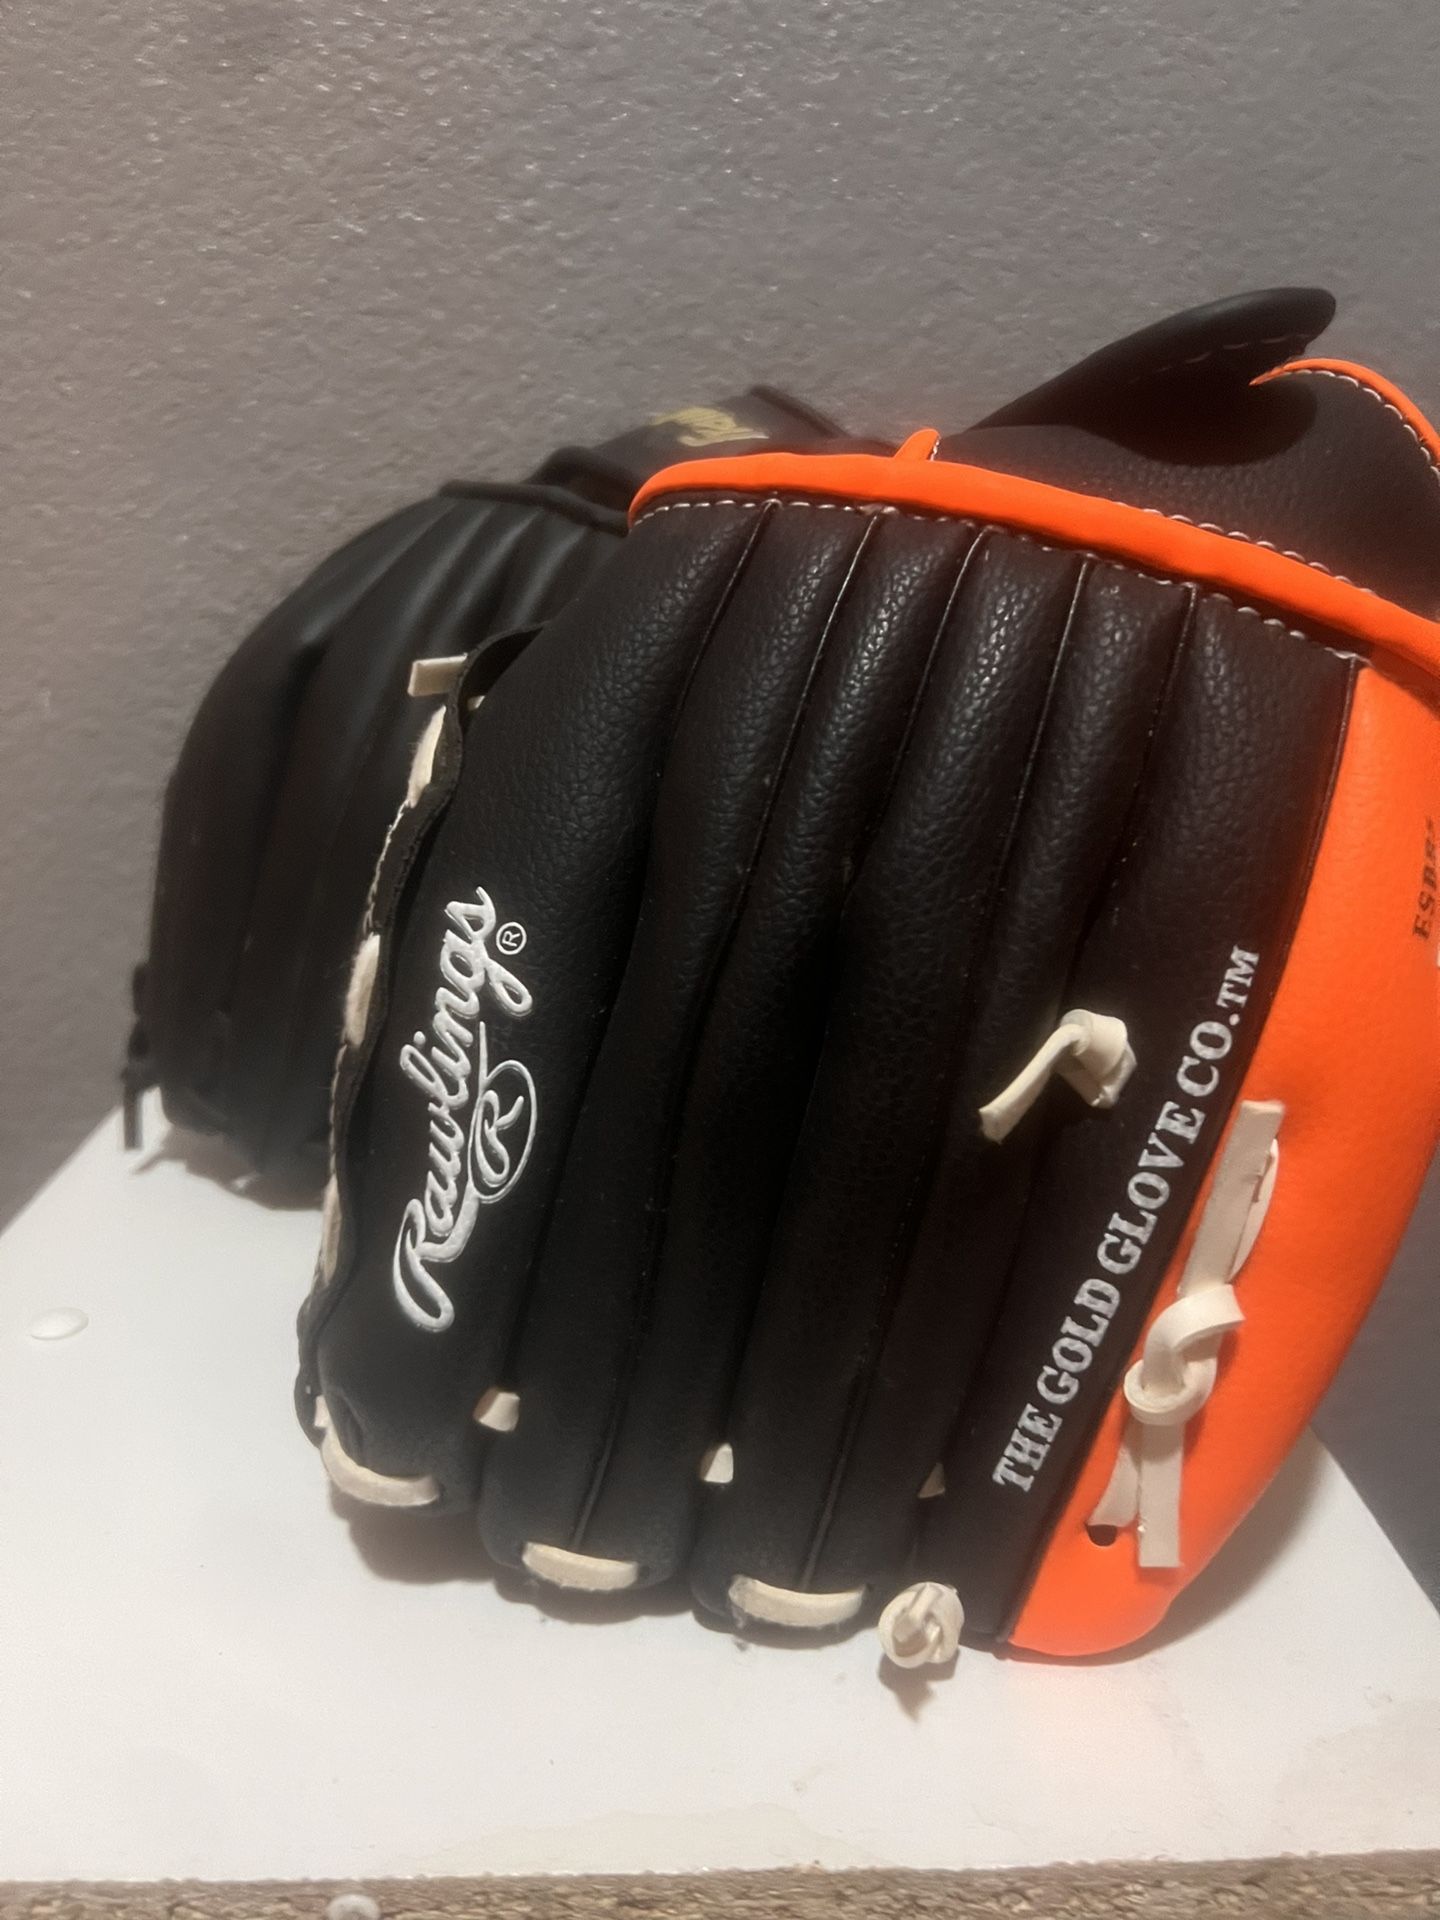 Baseball Gloves Rawlings And Franklin